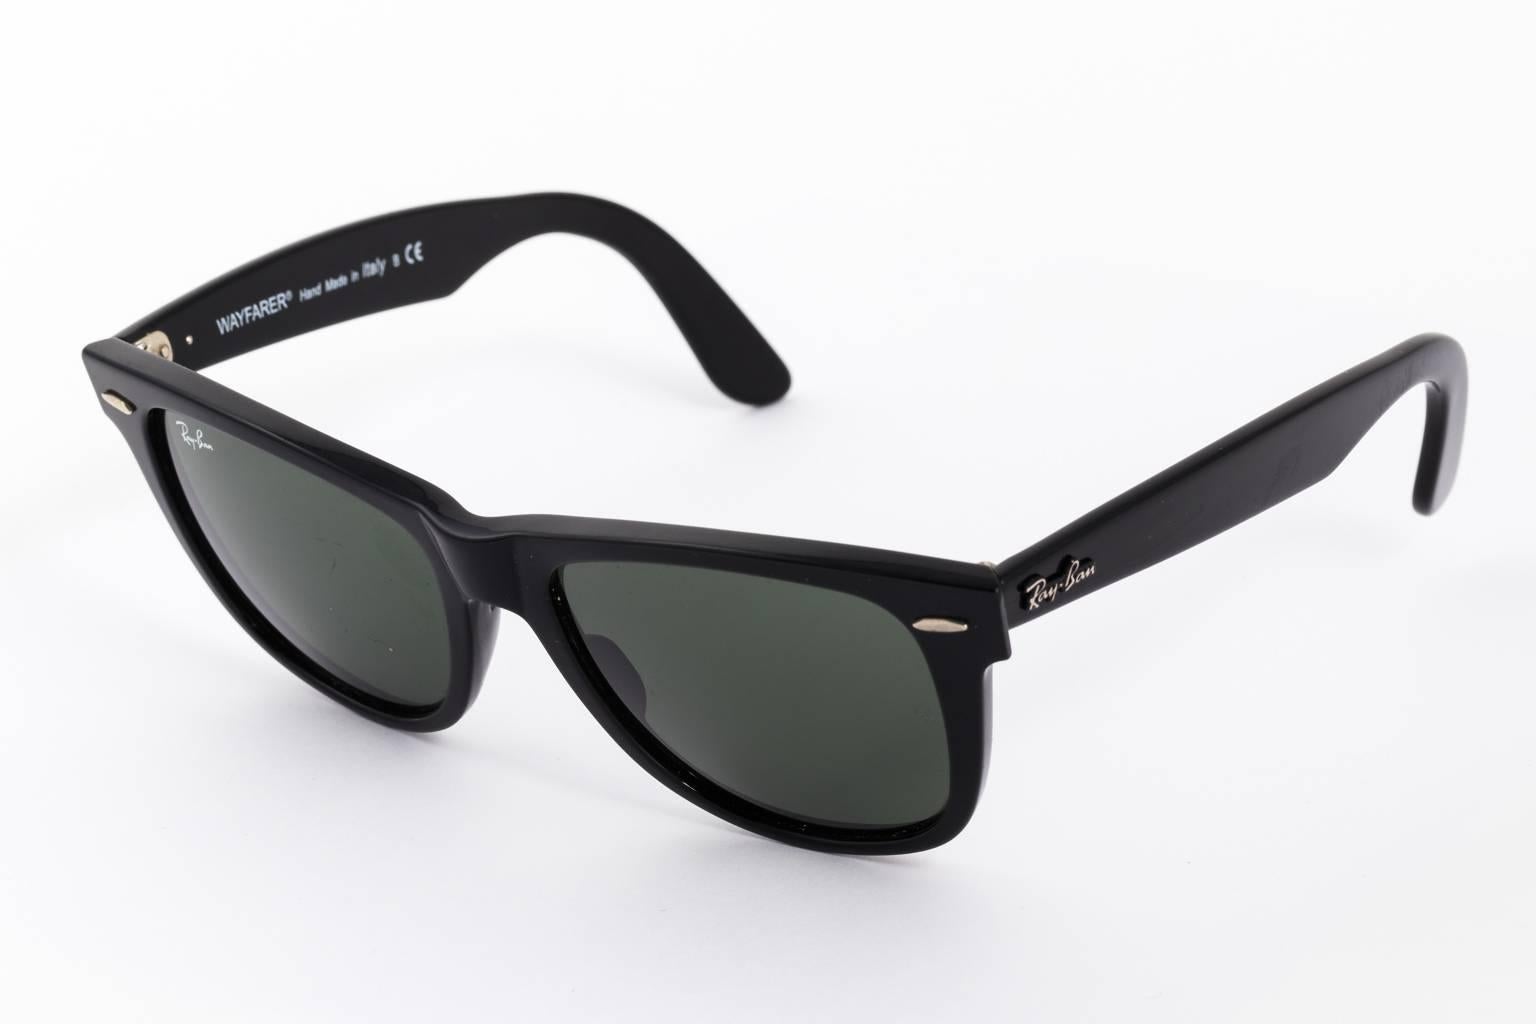  Black Ray-Ban sunglasses 2